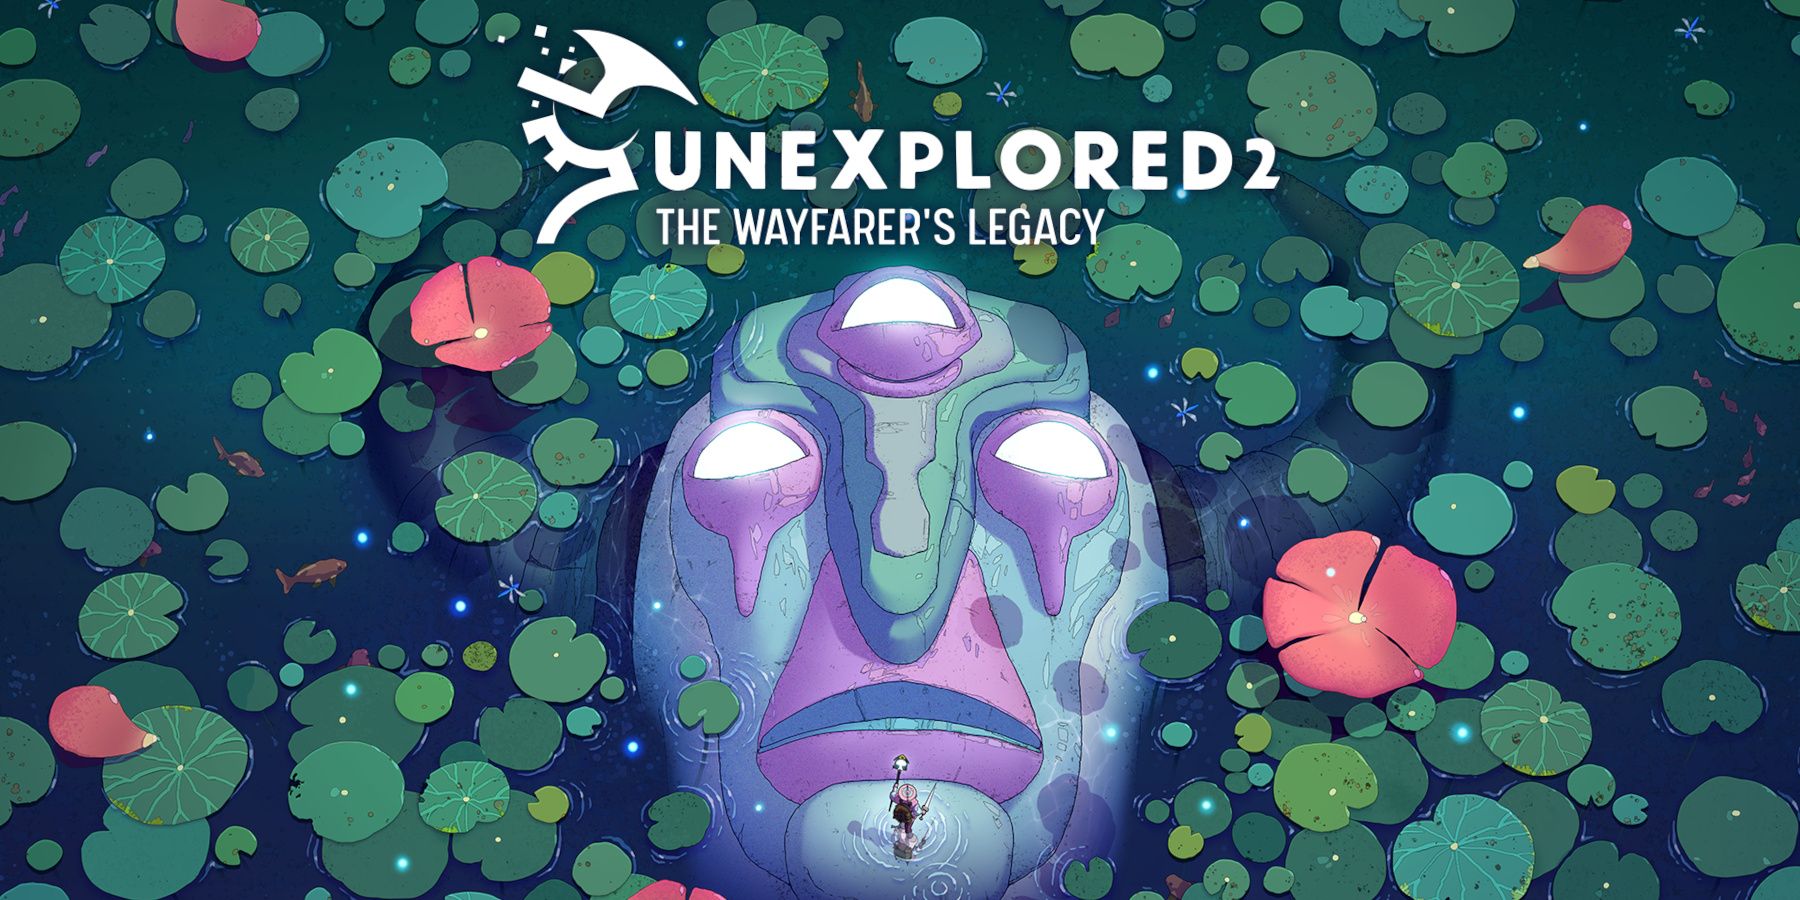 download the last version for ipod Unexplored 2: The Wayfarer